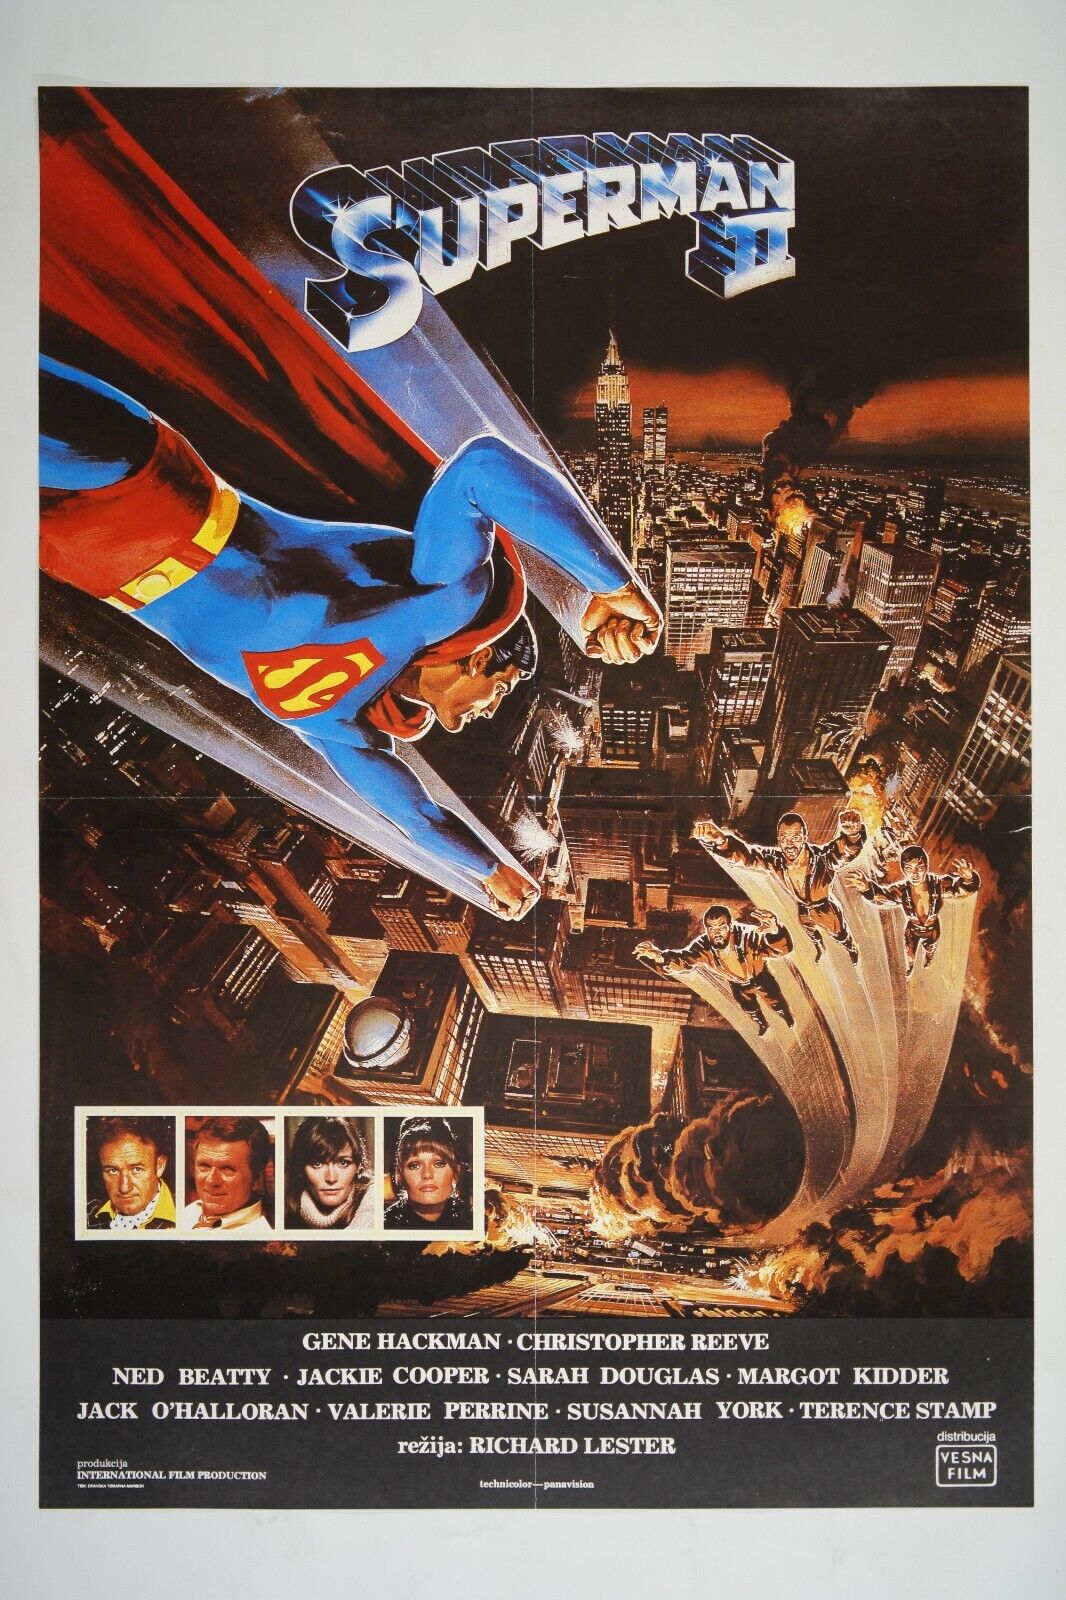 SUPERMAN II 2 Orig. exYU movie poster 1980 CHRISTOPHER REEVE GENE HACKMAN DONNER